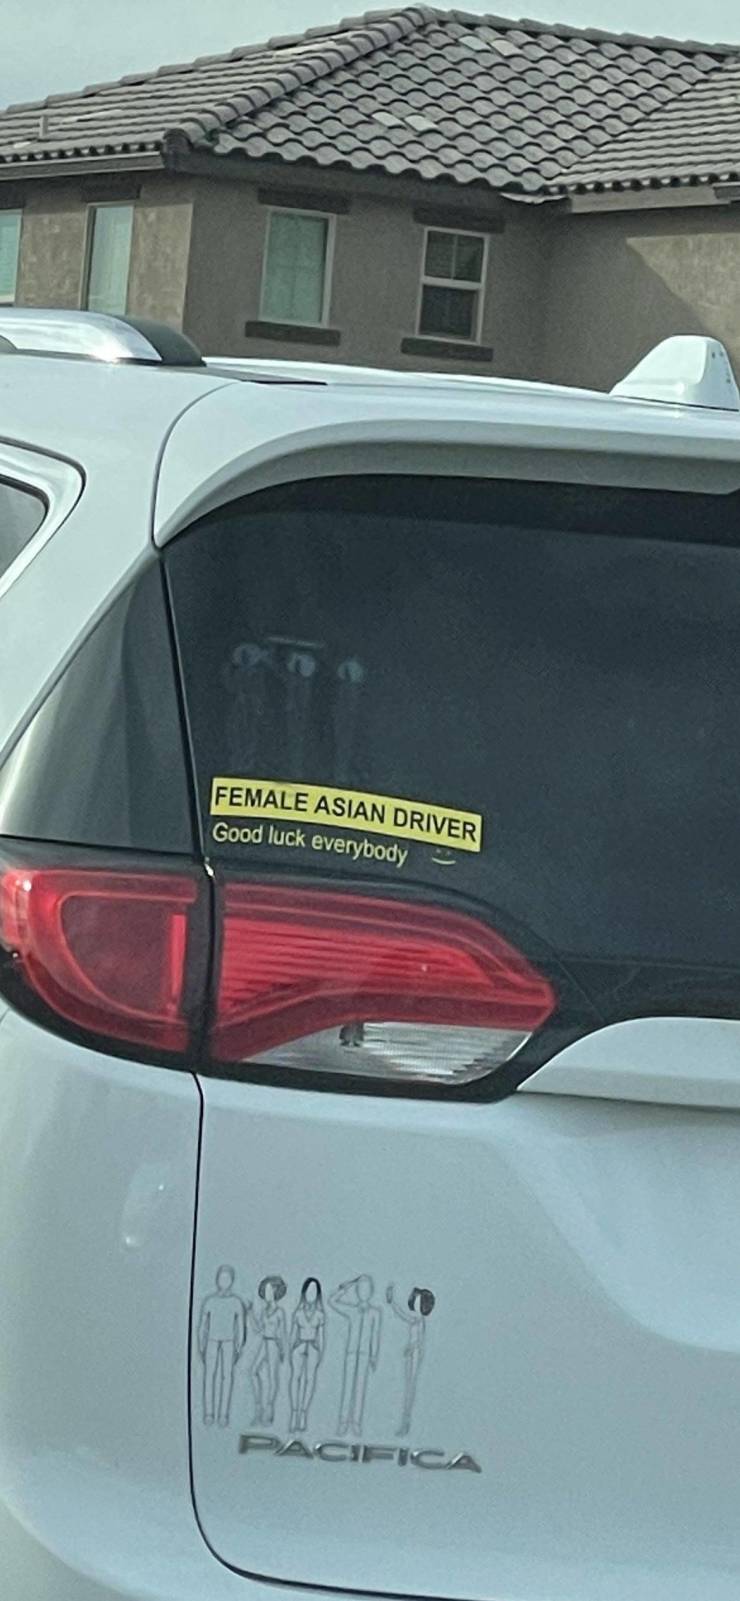 funny photos - fun randoms - family car - Female Asian Driver Good luck everybody Pacifica